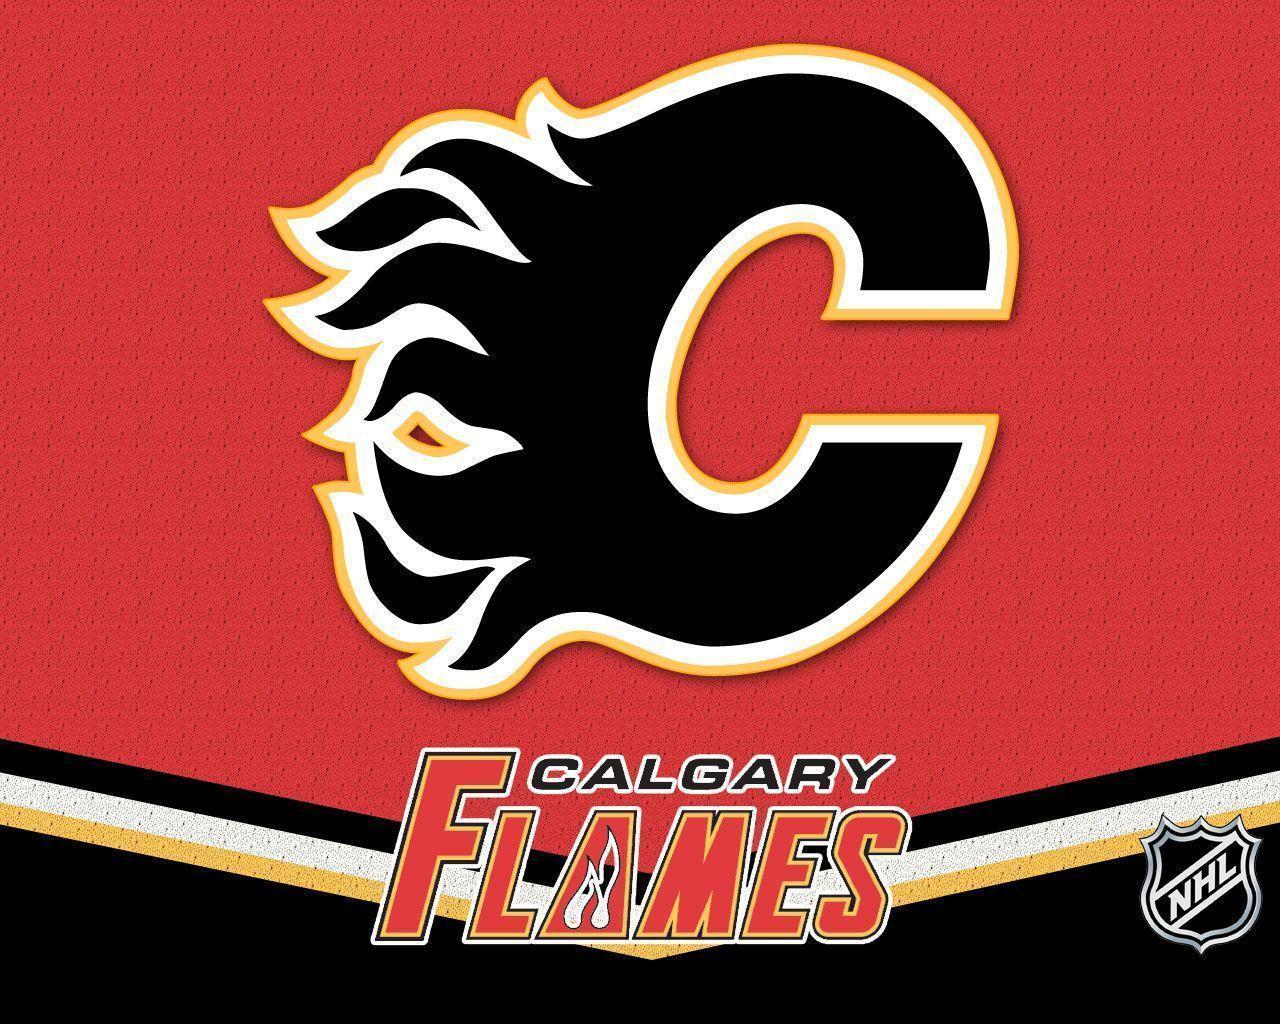 Calgary Flames 2015 2016 Season Preview. The Pink Puck